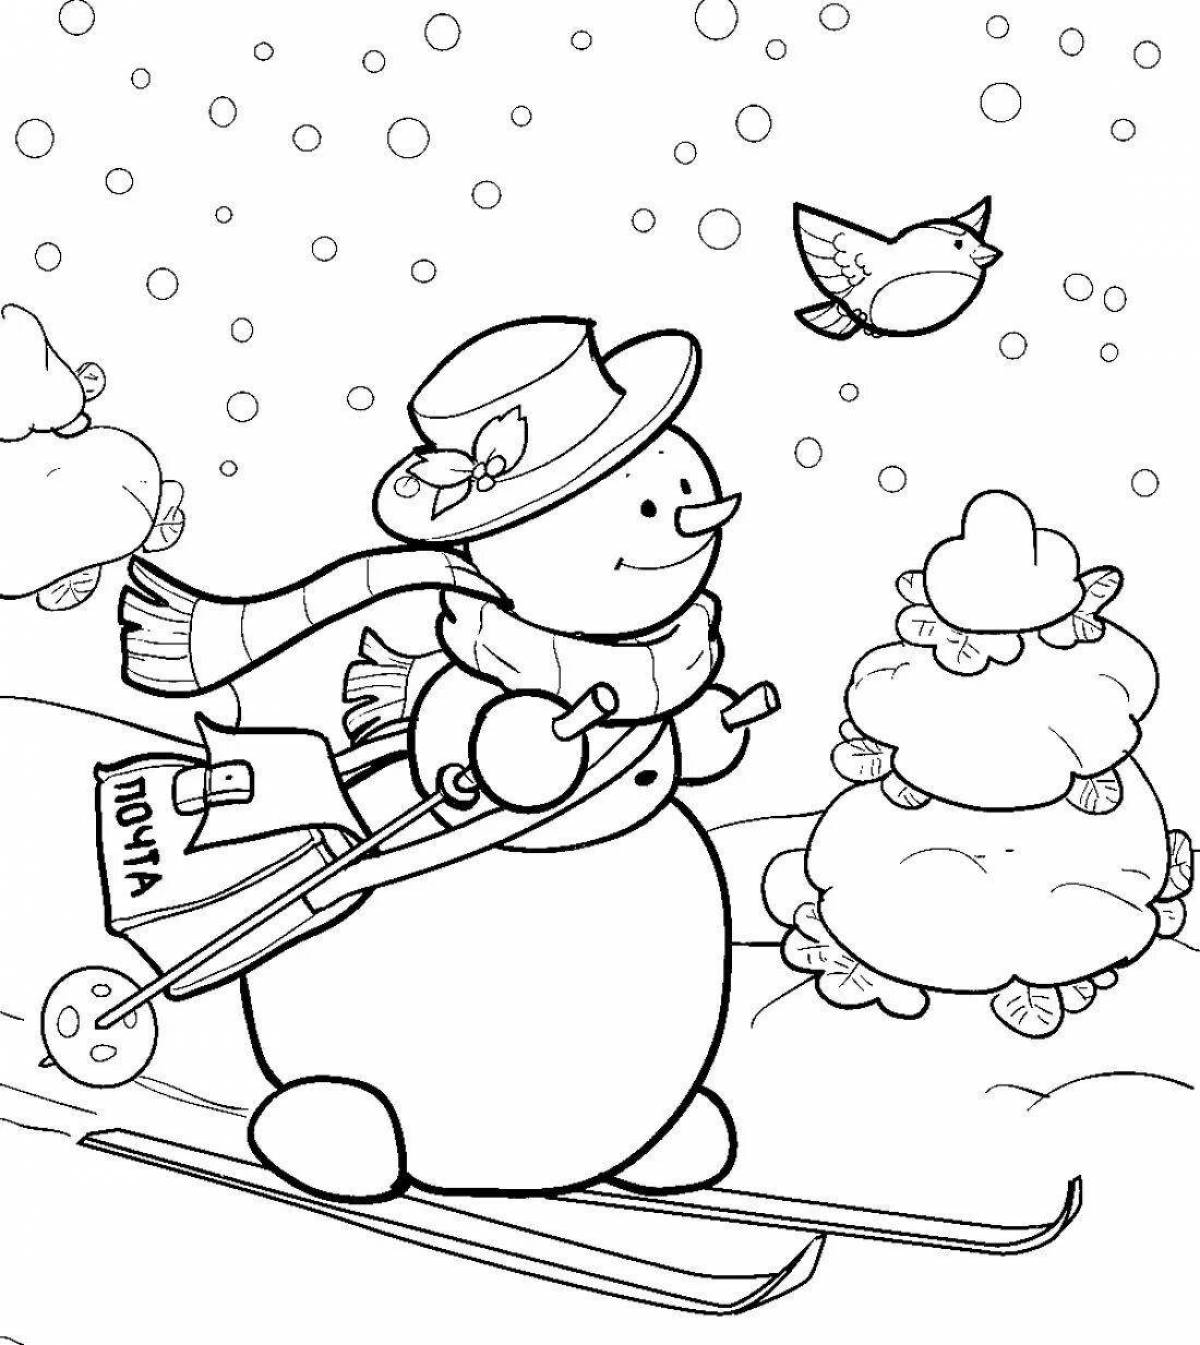 Sledding snowman #2